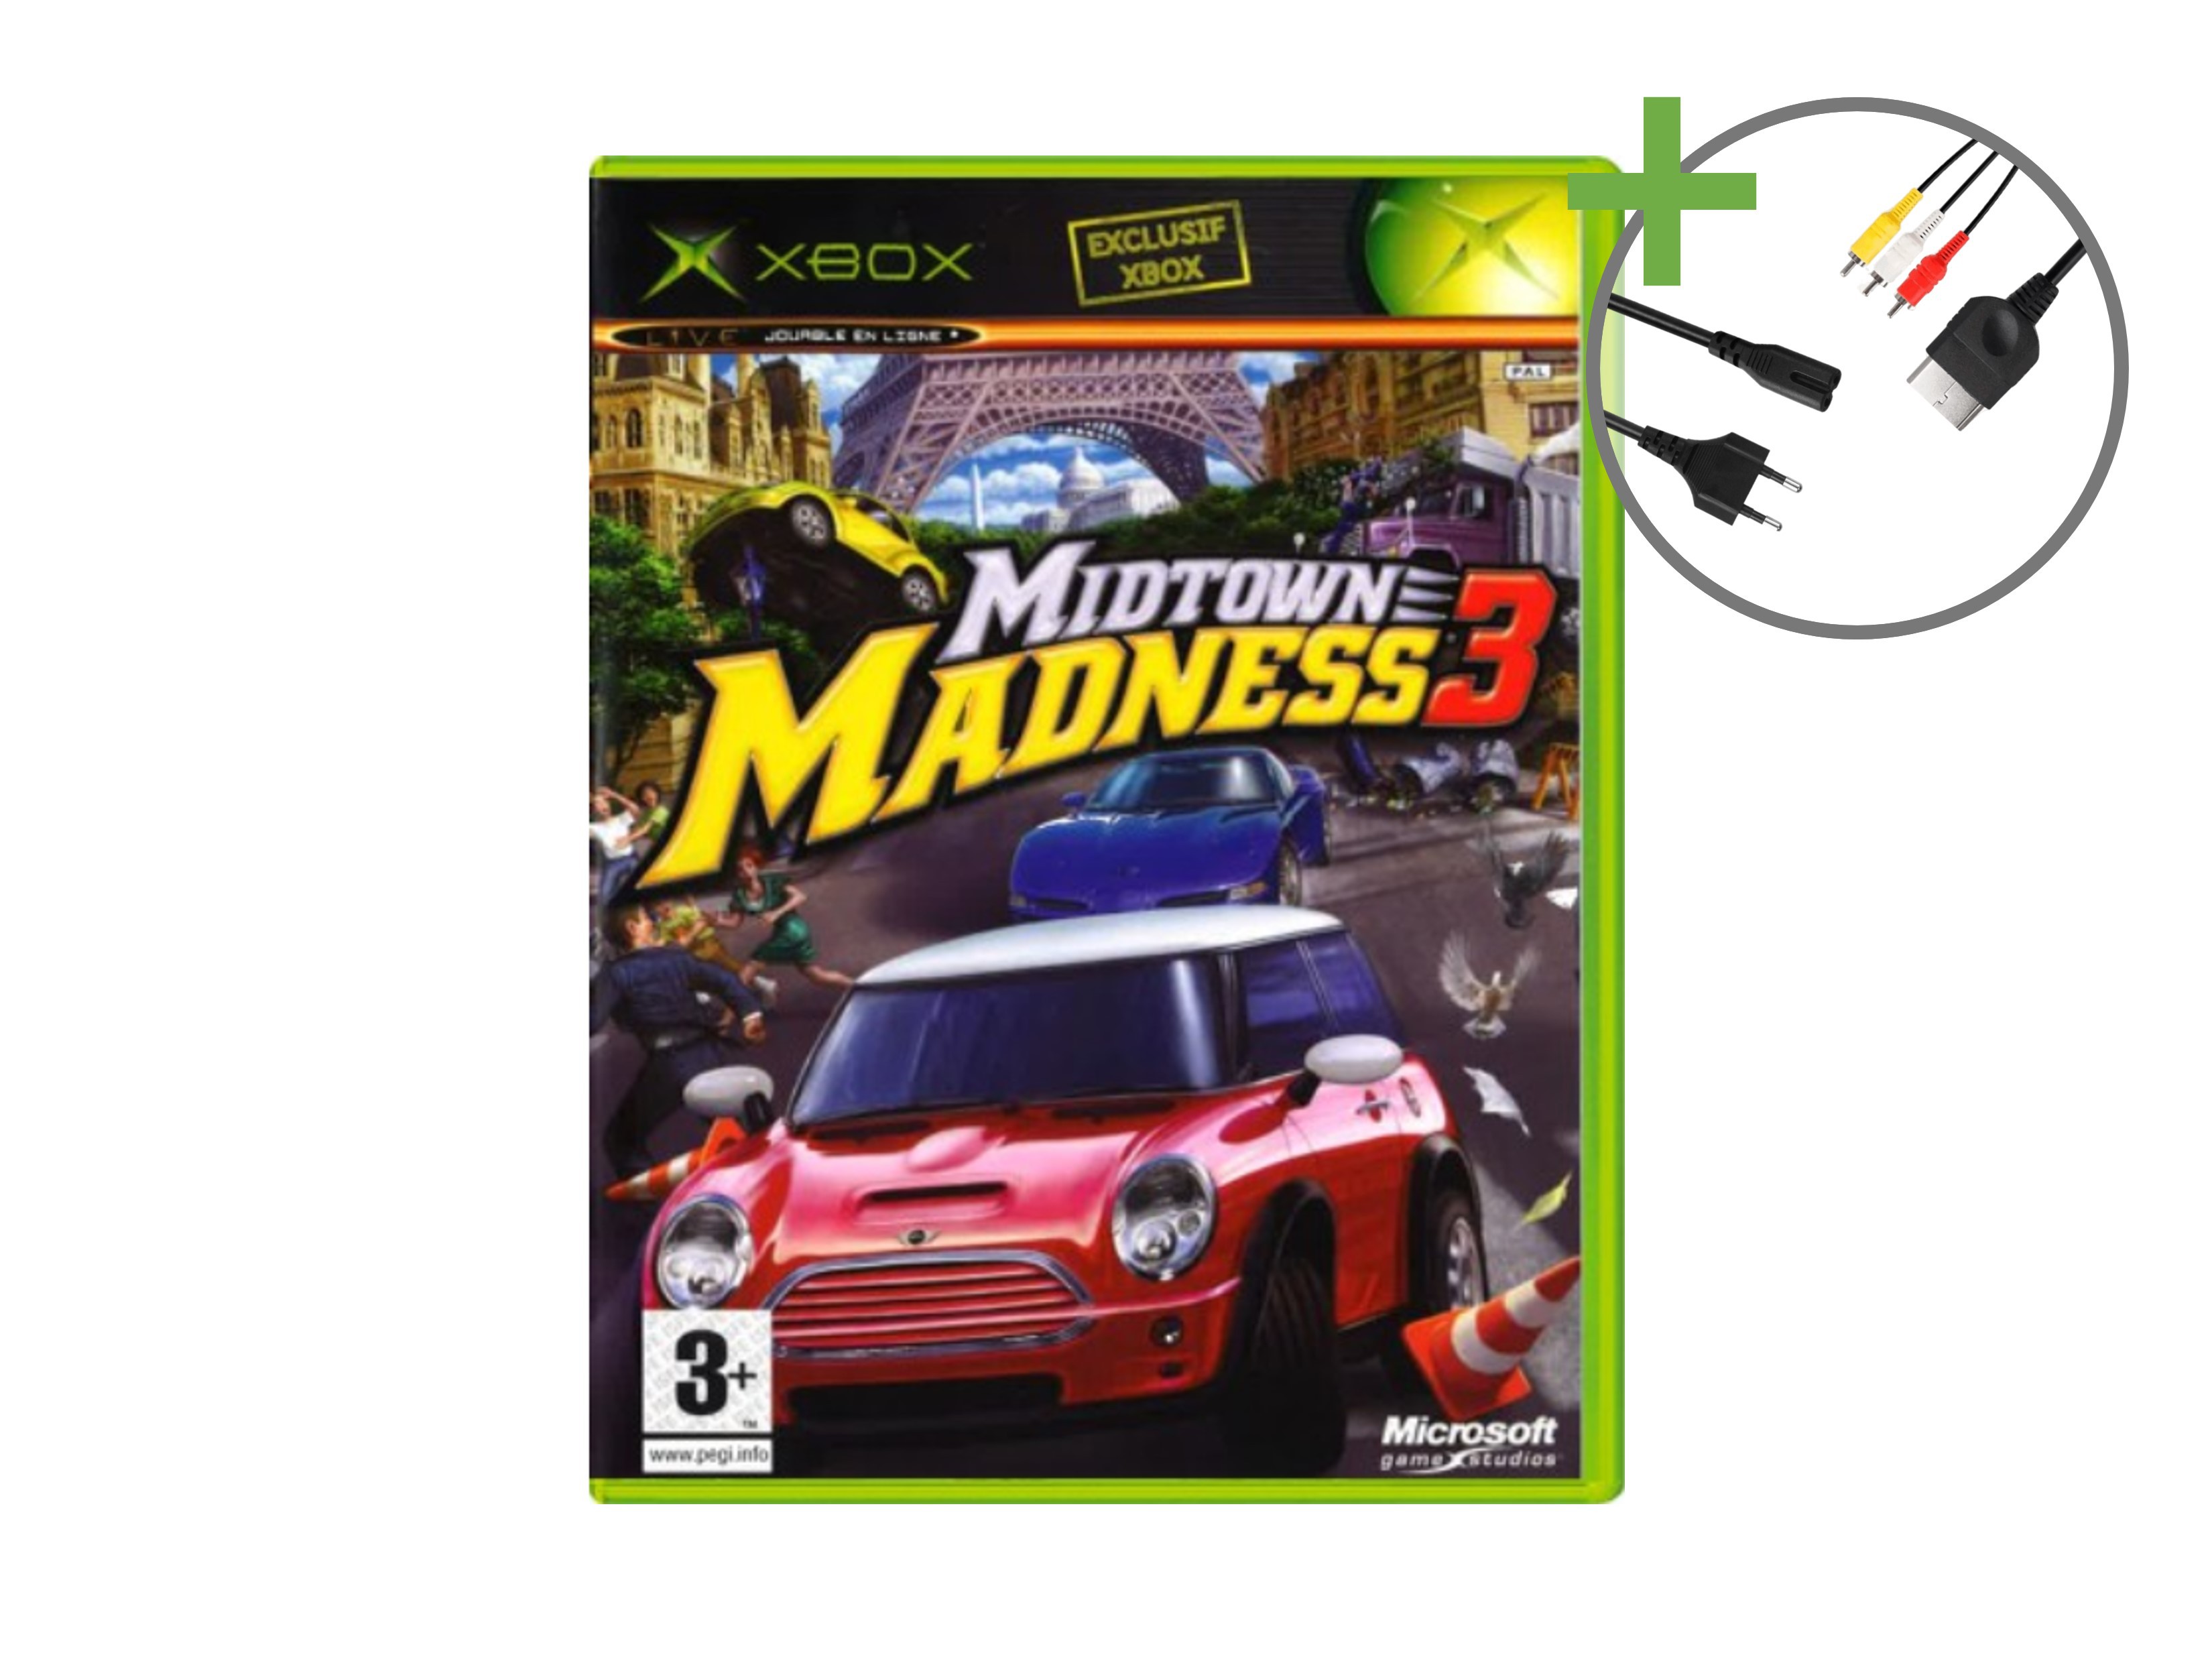 Microsoft Xbox Classic Starter Pack - Midtown Madness 3 Edition - Xbox Original Hardware - 4